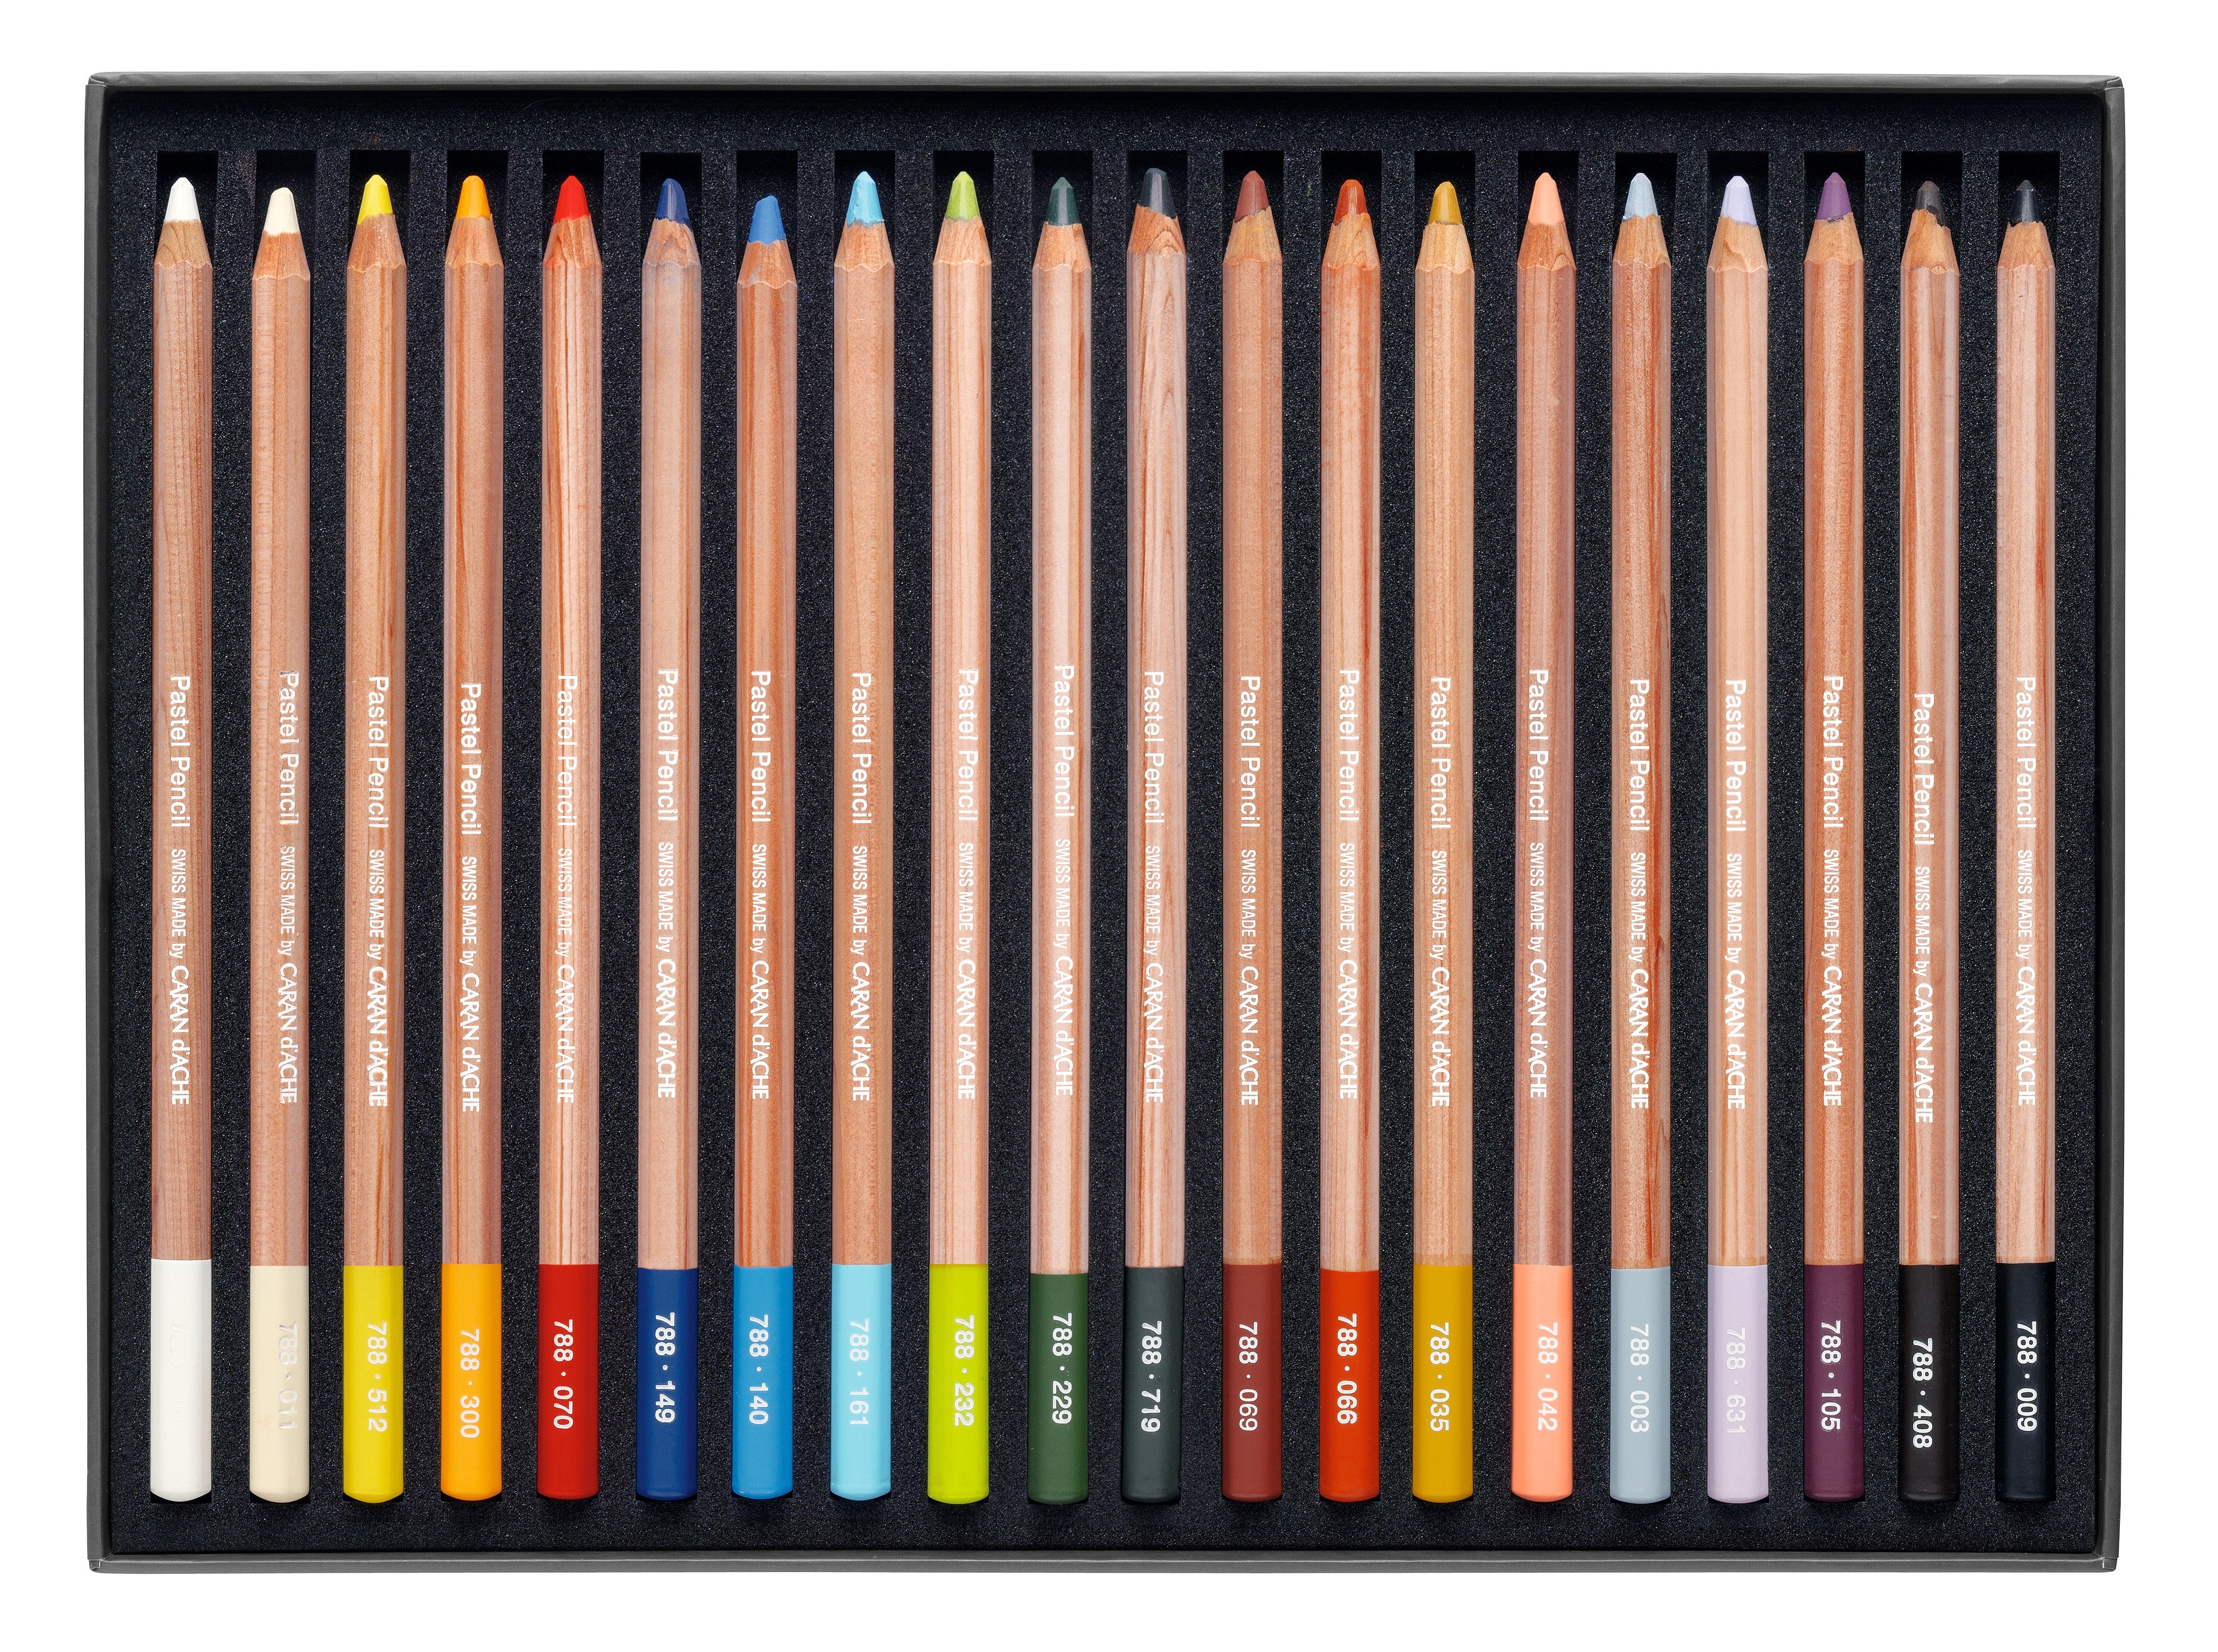 Caran d'Ache Artist Pastel Pencil set 20